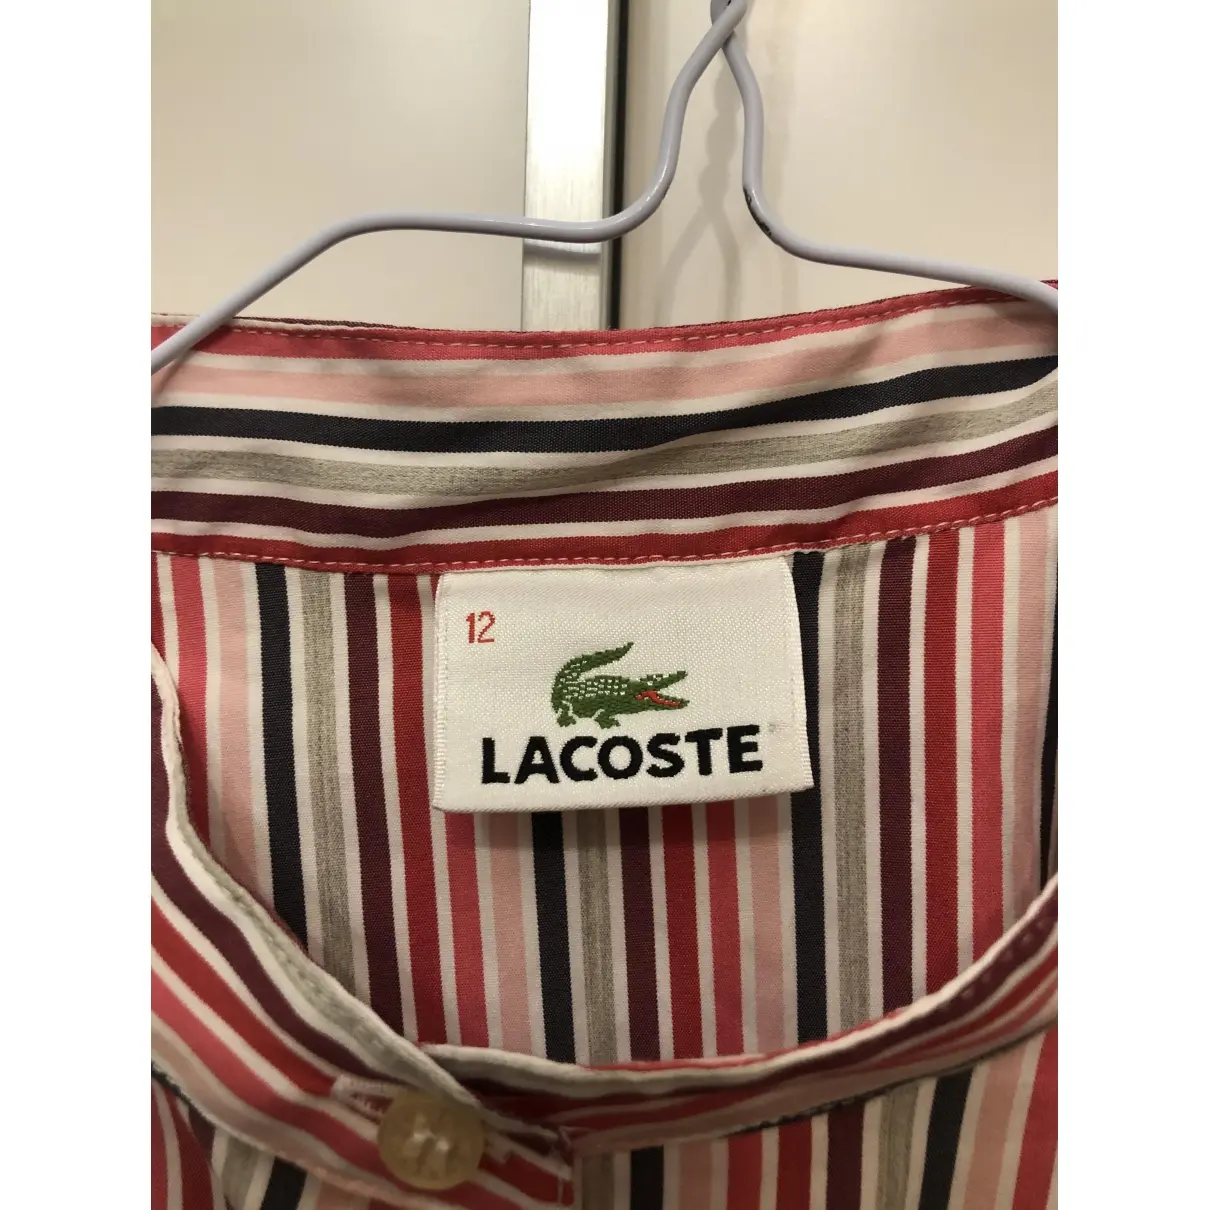 Buy Lacoste Shirt online